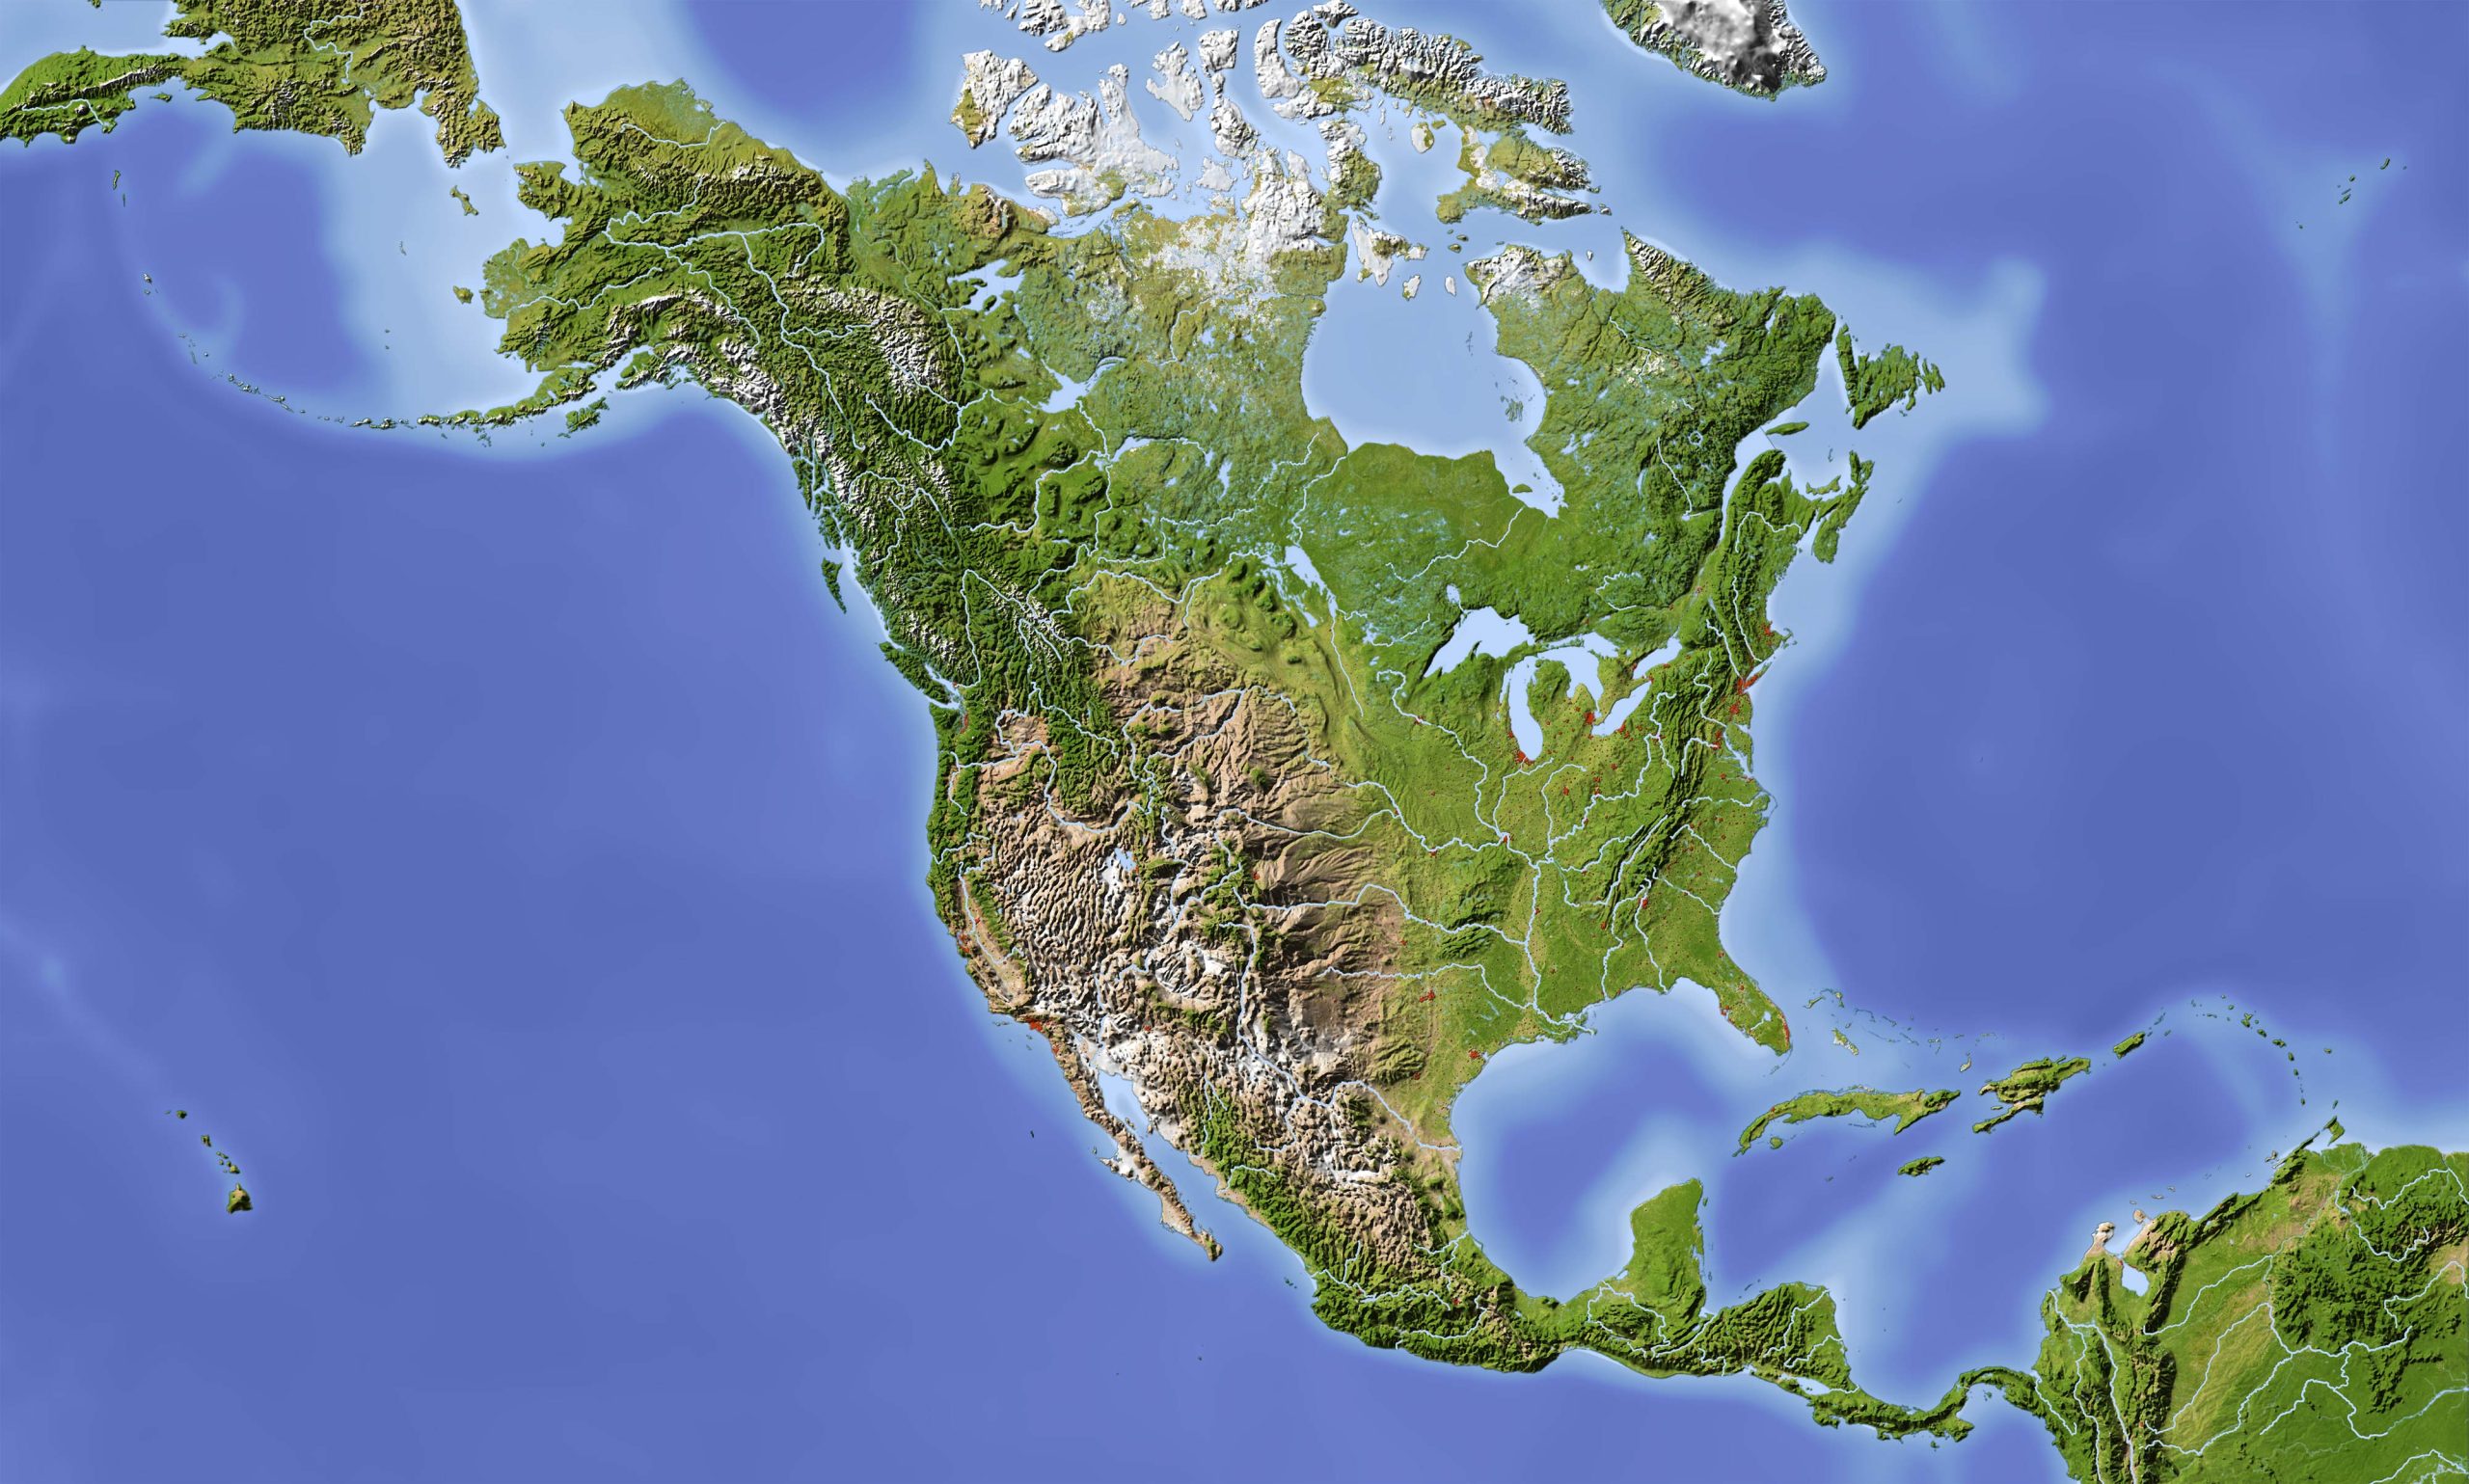 North America Relief Map